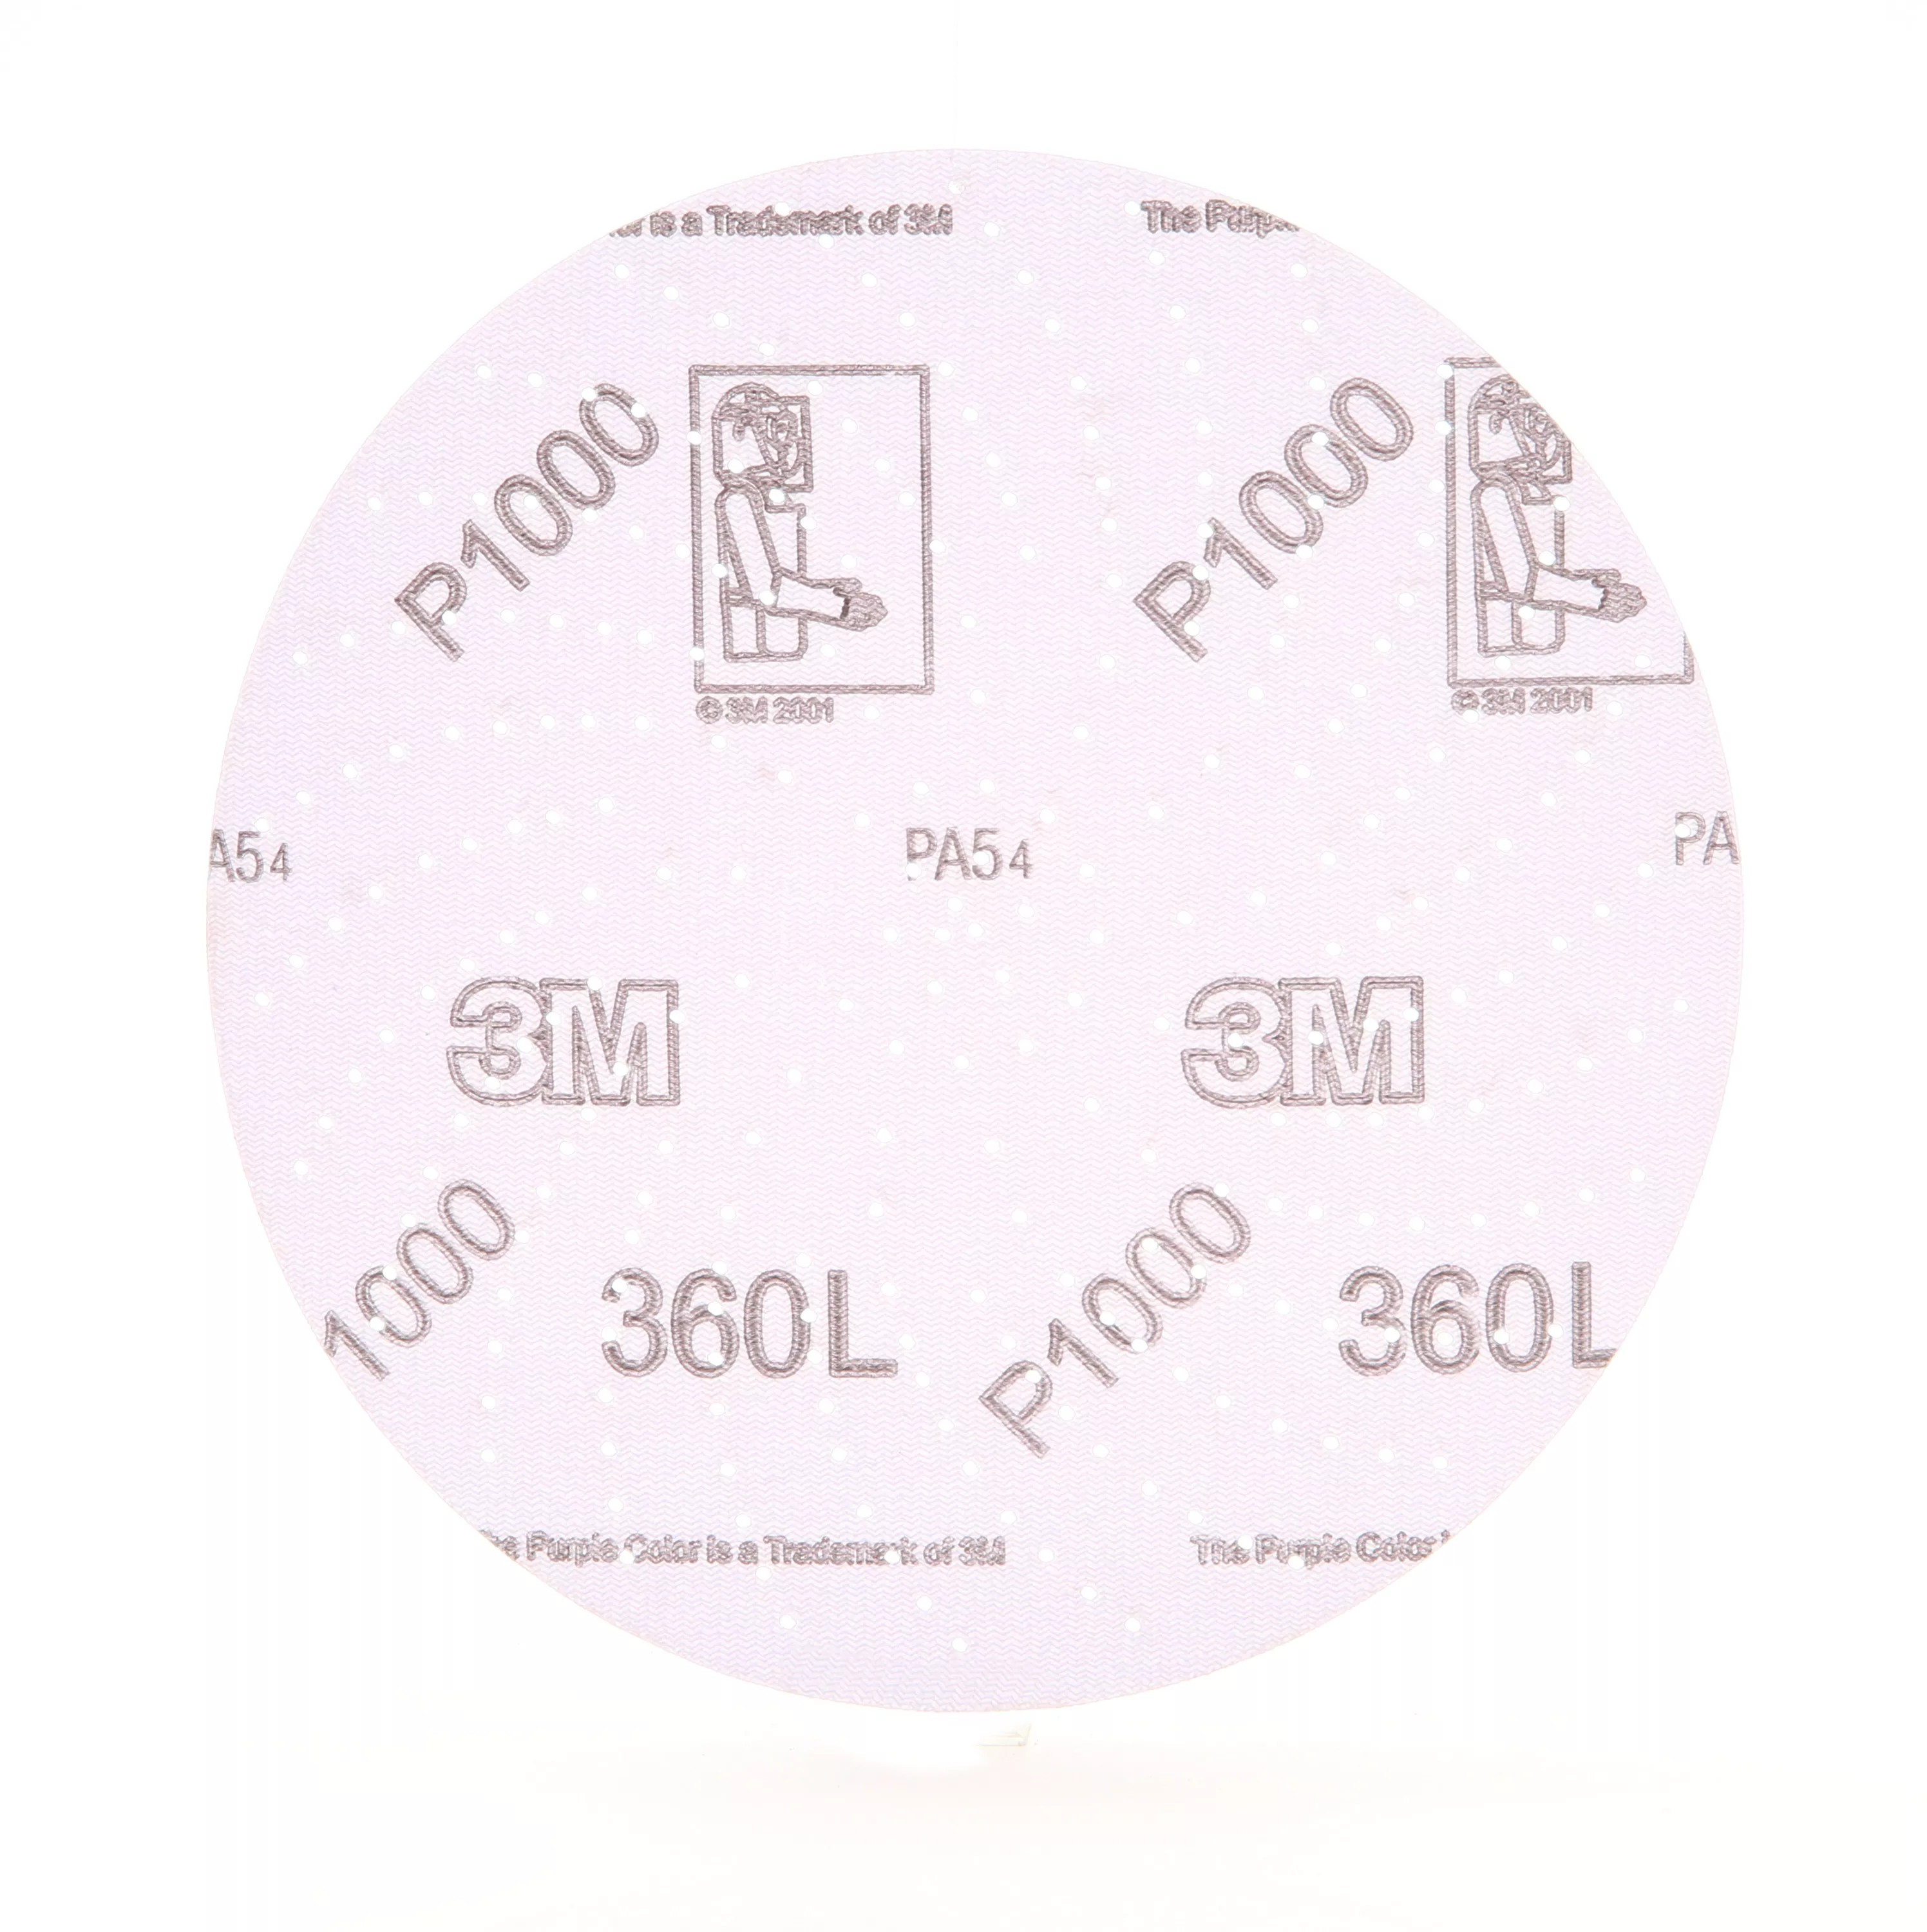 3M Xtract™ Film Disc 360L, P1000 3MIL, 6 in, Die 600LG, 100/Carton, 500
ea/Case